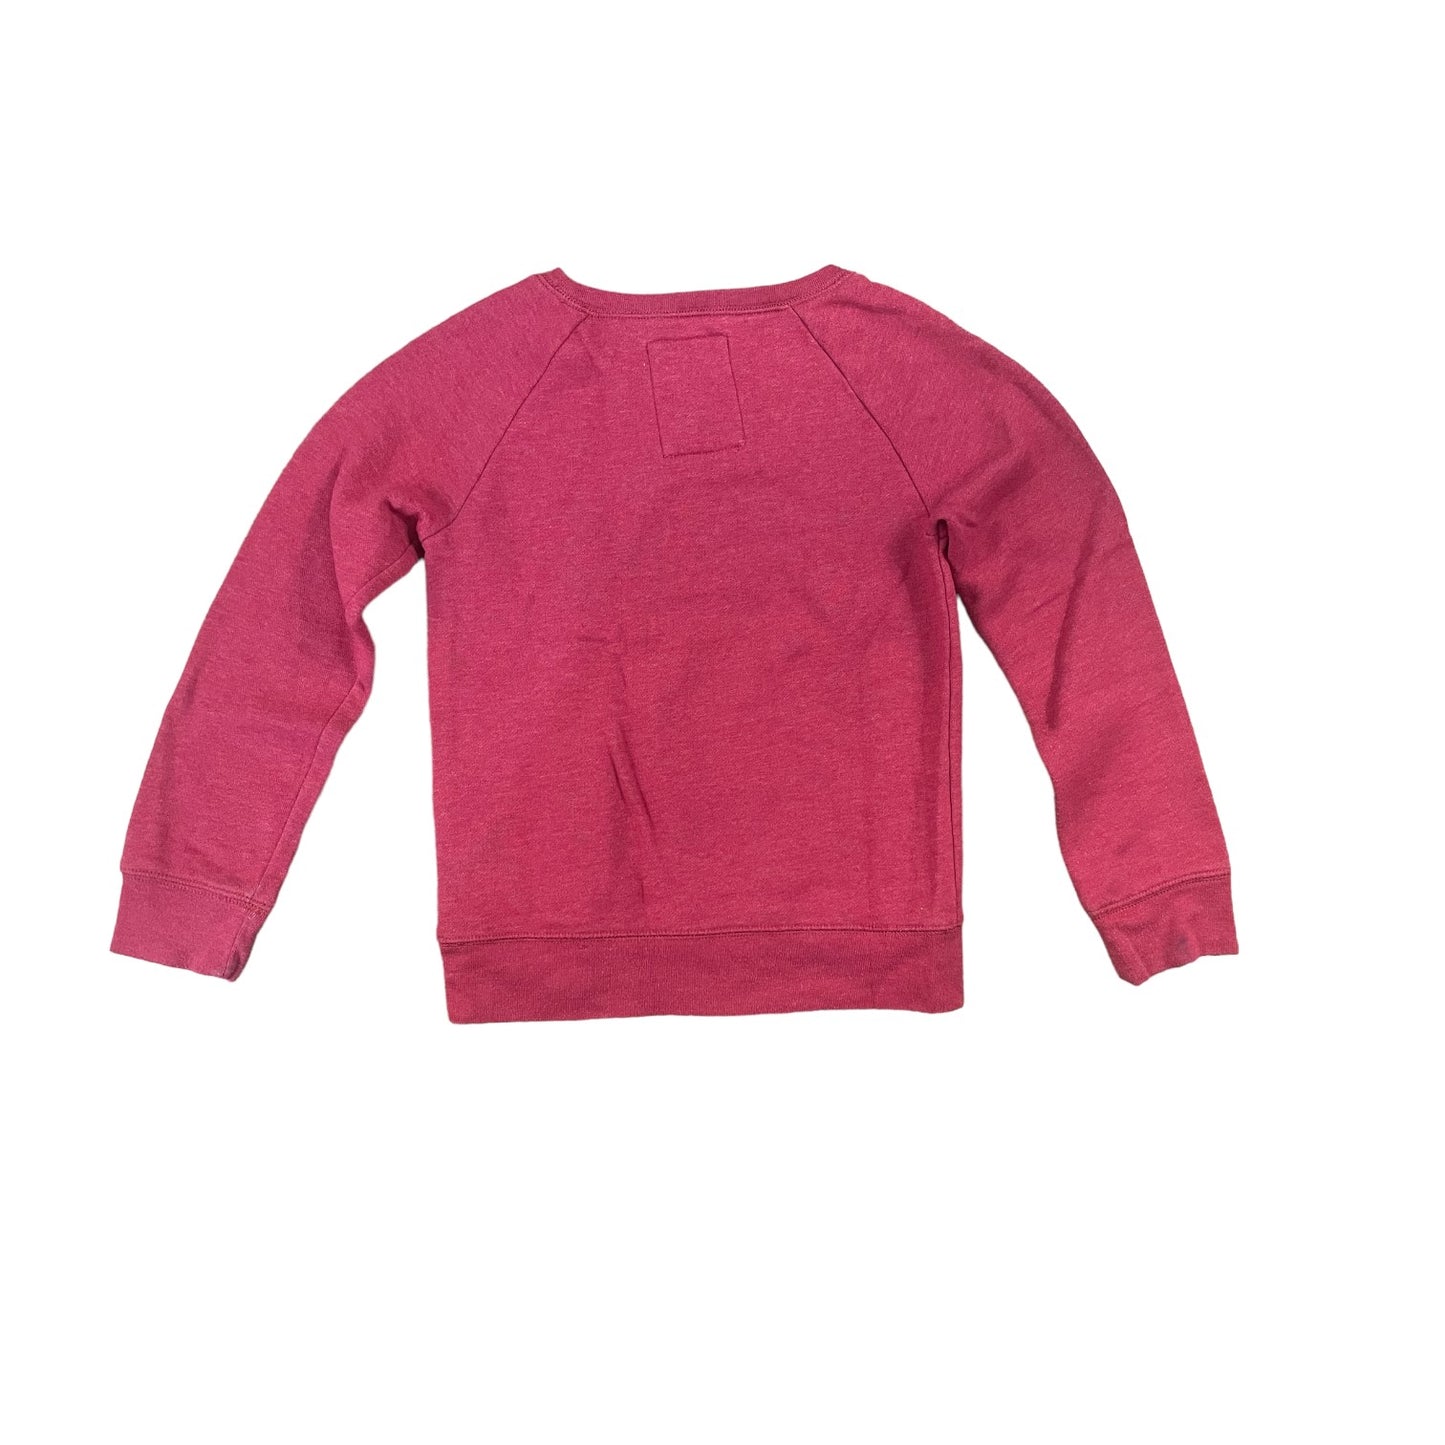 Girls 49er Sweatshirt Size S (6-7)